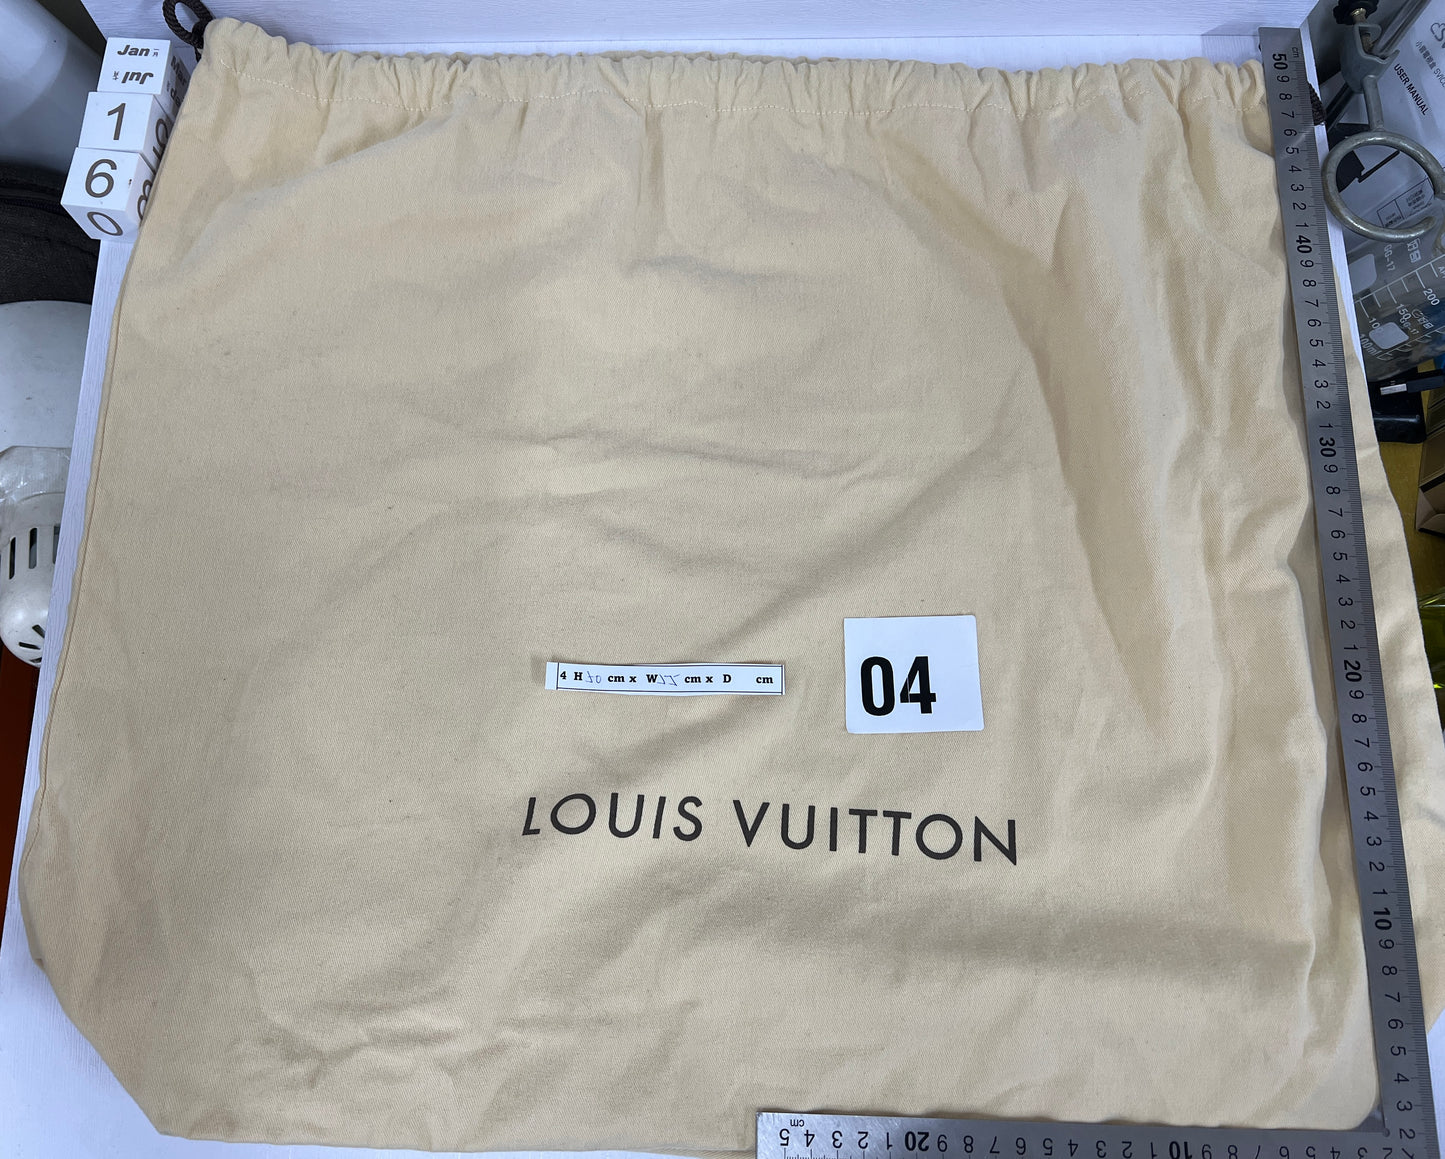 Louis Vuitton LV 防塵袋珠寶錢包袋 - 2023 年 1 月 16 日